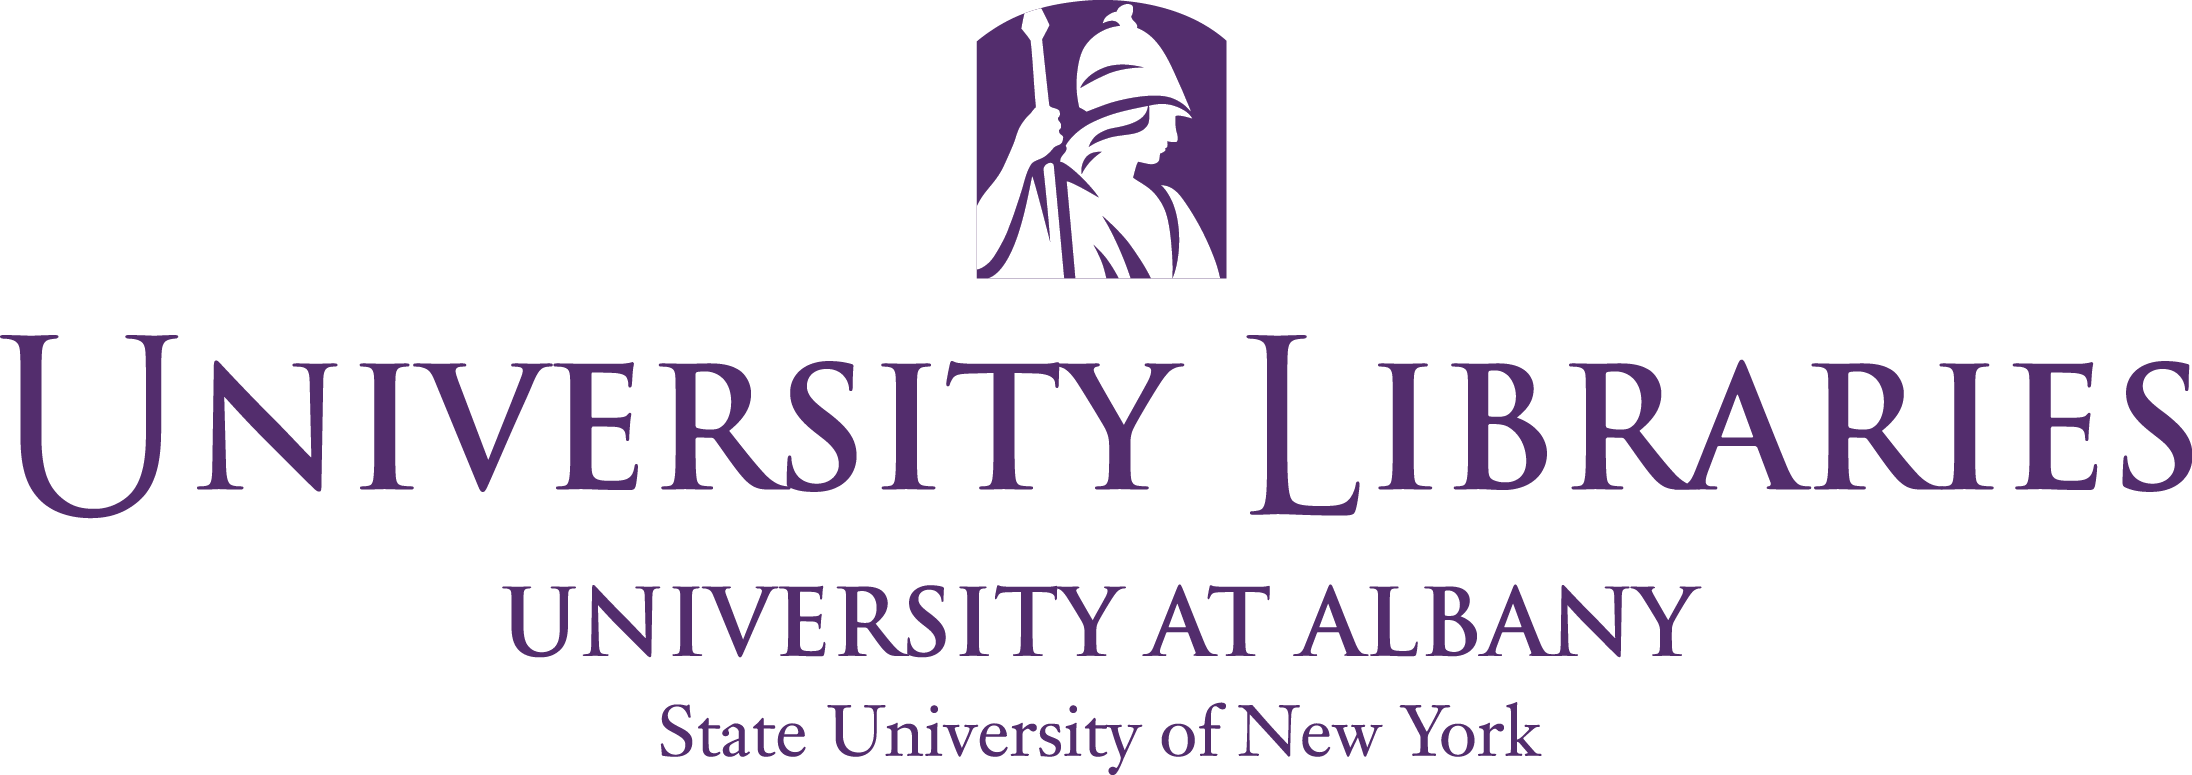 University Libraries - University at Albany - State University of New York